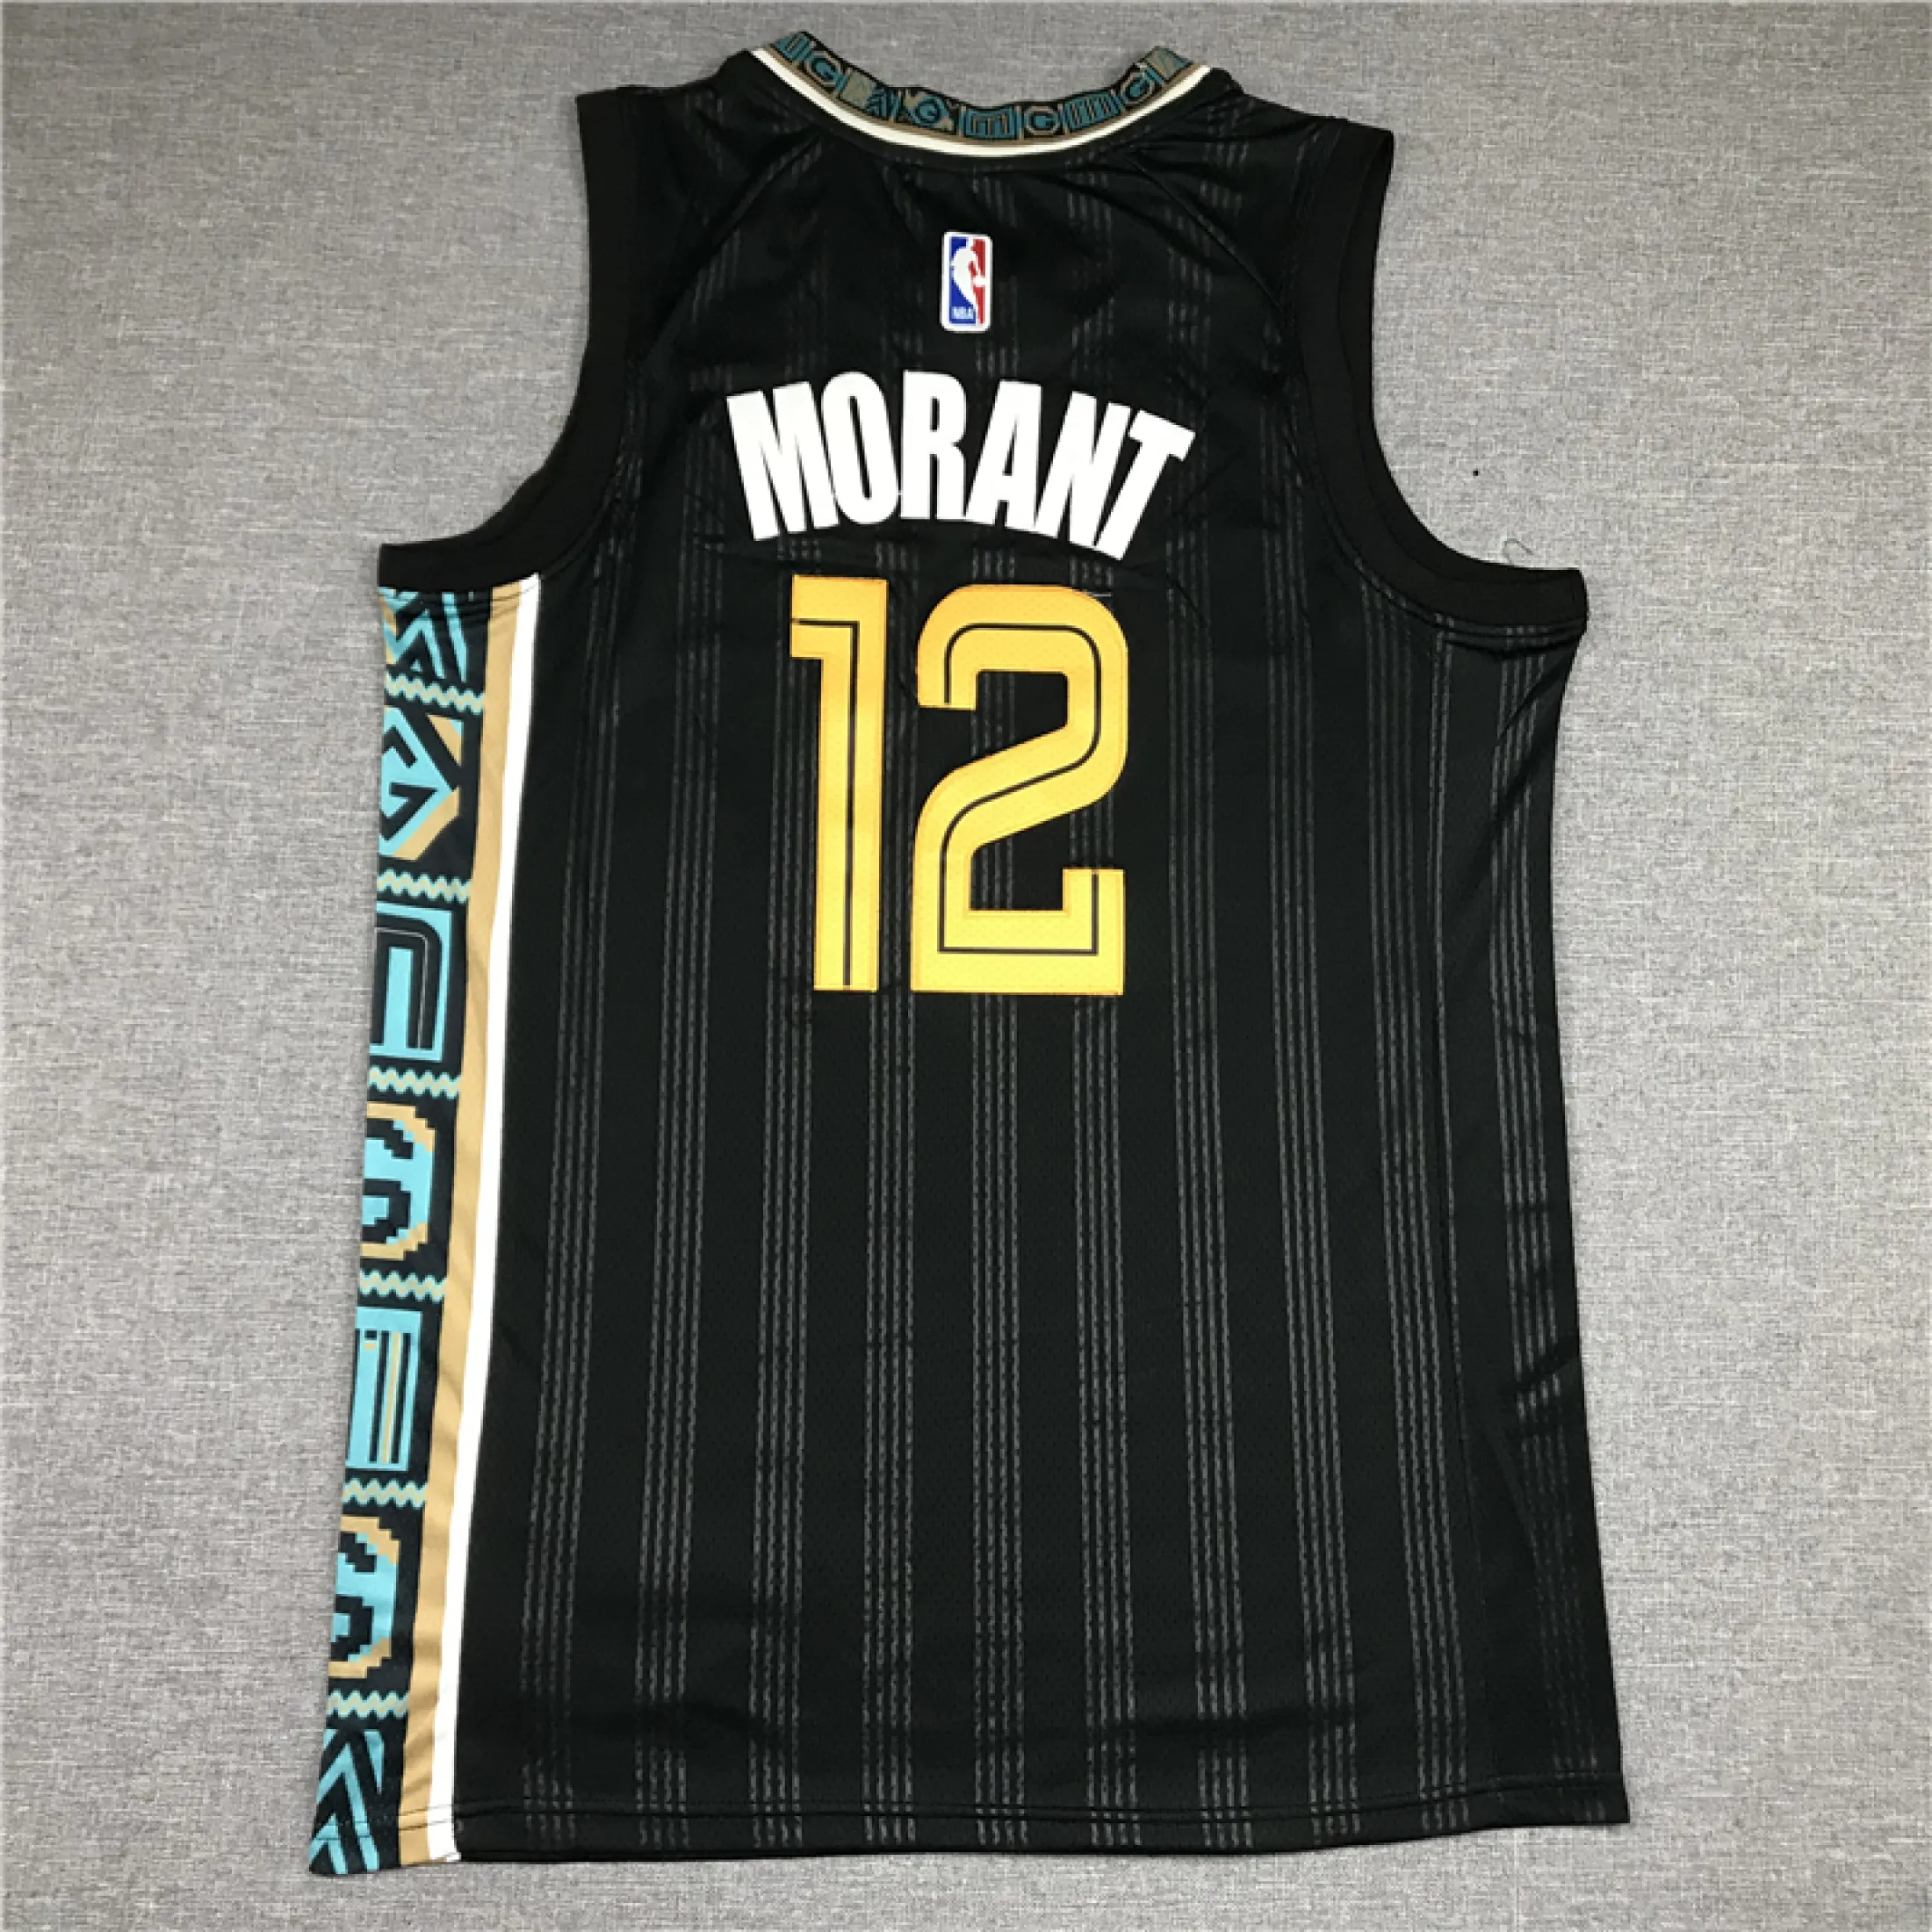 20//21 New Season Ja Morant #12 Memphis Grizzlies Jersey Black